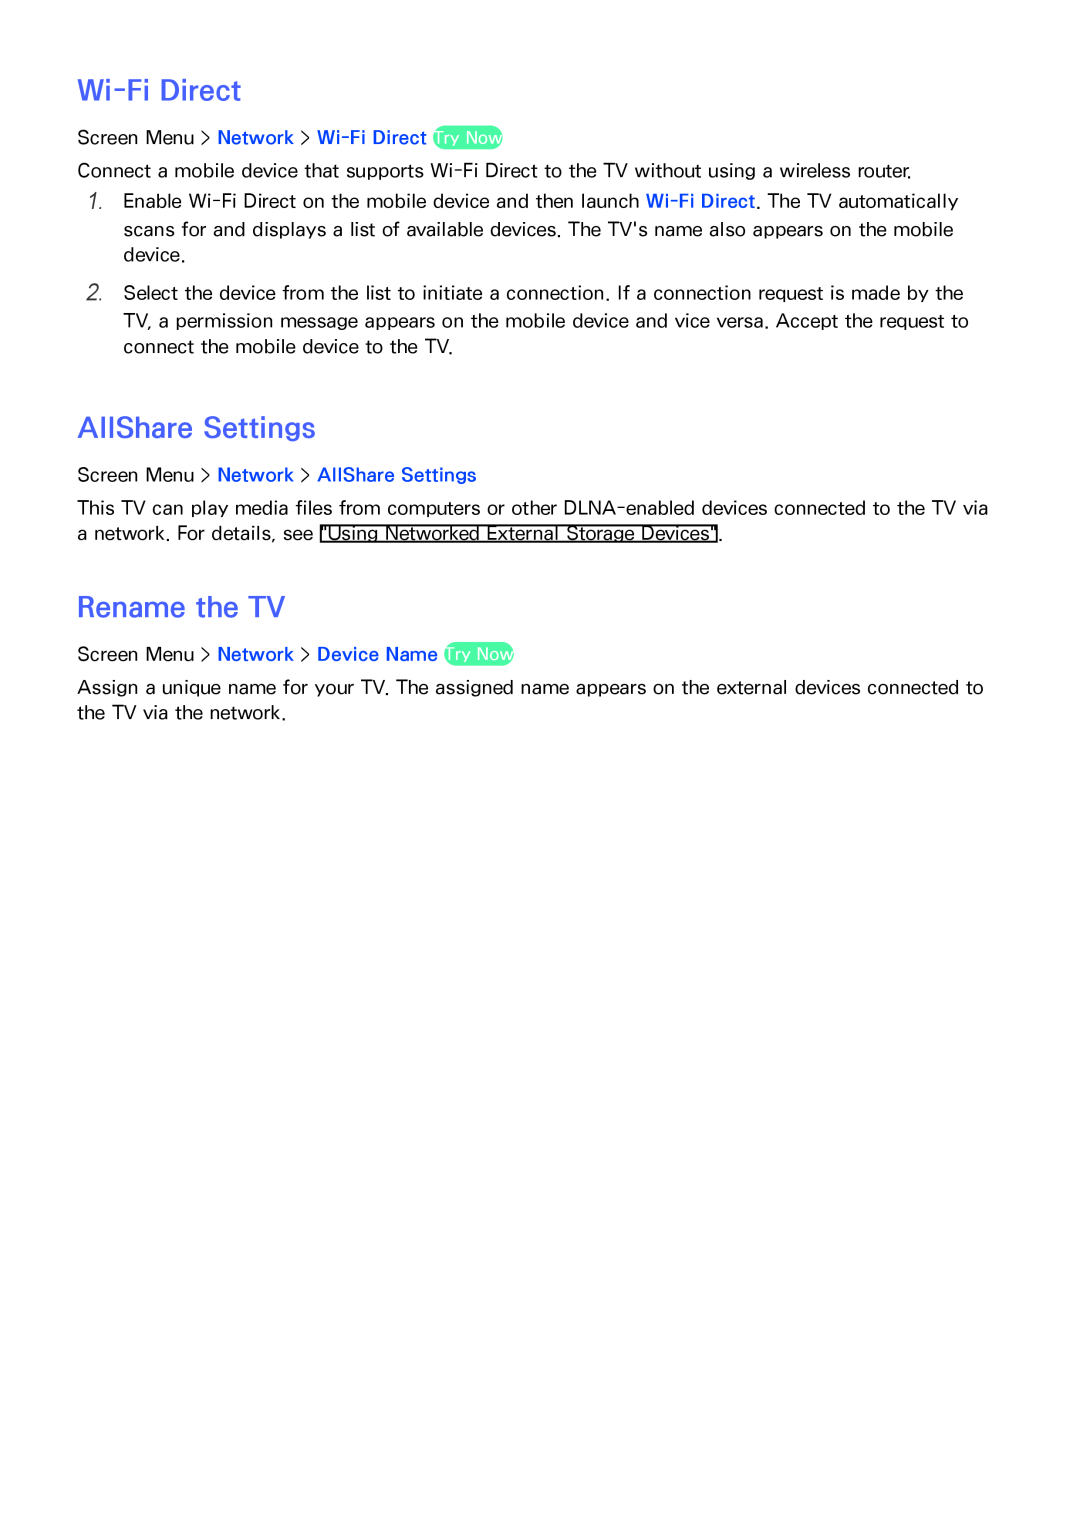 Samsung SEK-1000 manual AllShare Settings, Rename the TV, Screen Menu > Network > Wi-FiDirect Try Now 